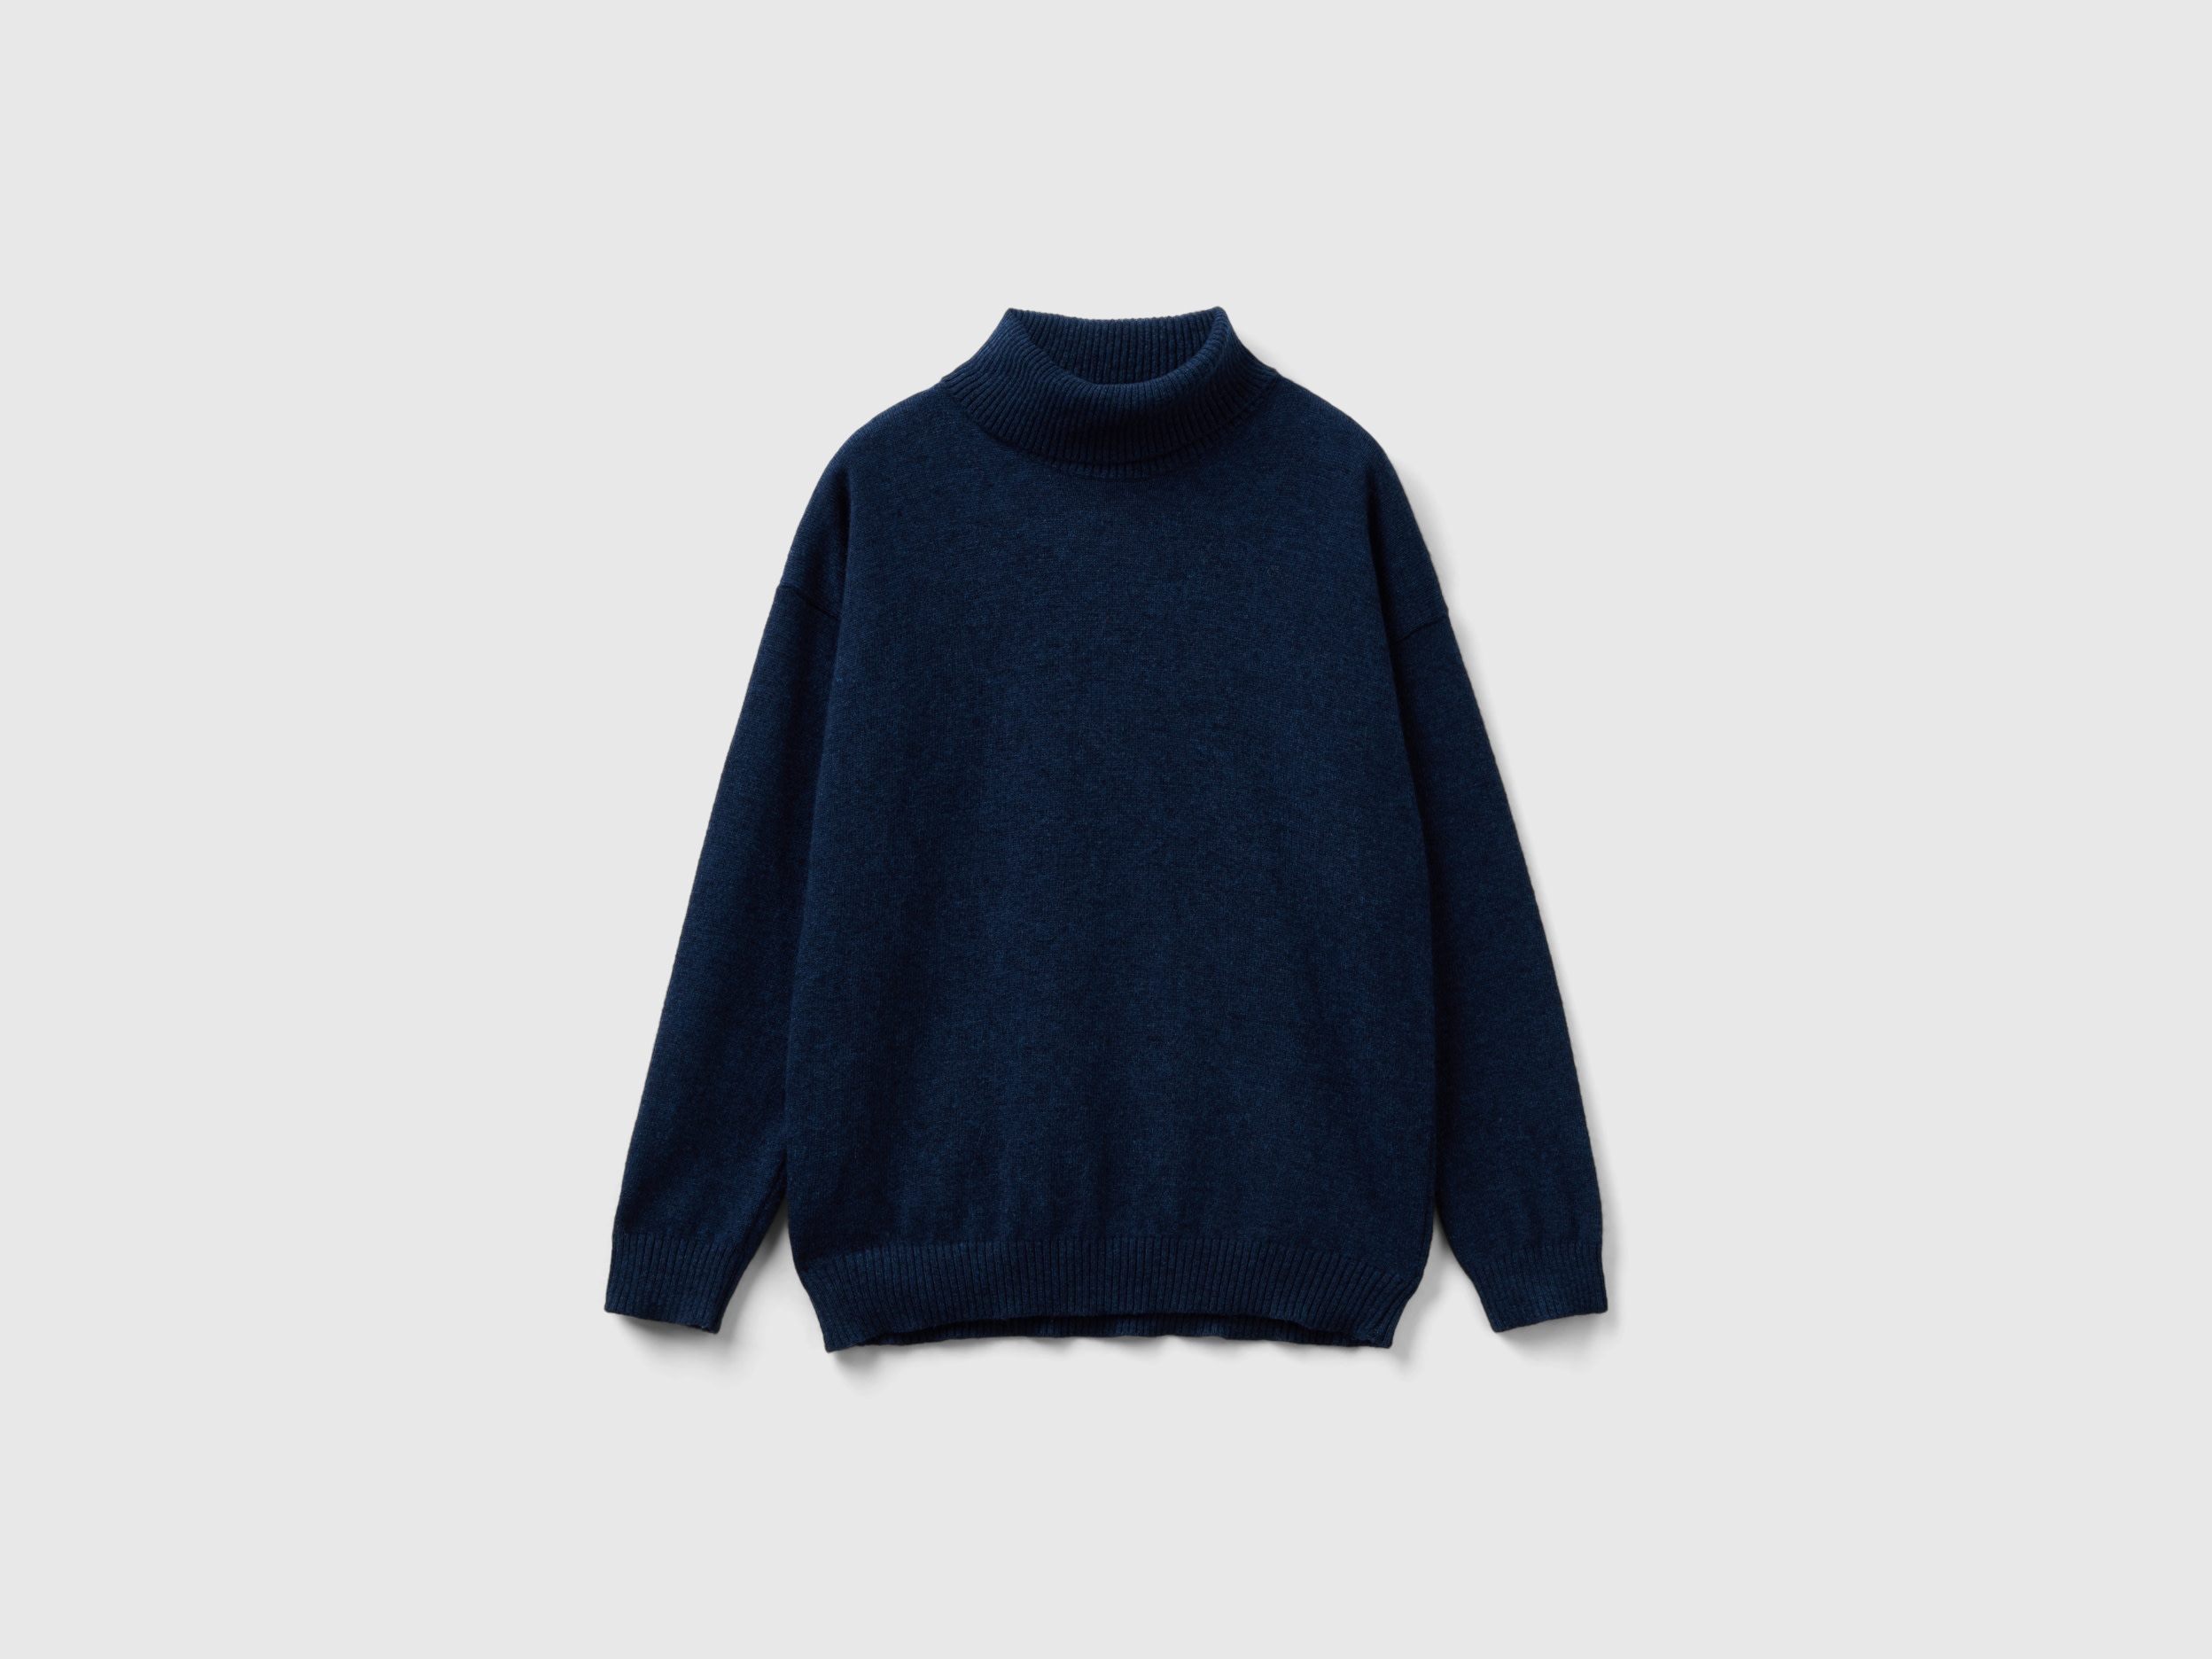 Benetton, Turtleneck Sweater In Cashmere And Wool Blend, size S, Dark Blue, Kids